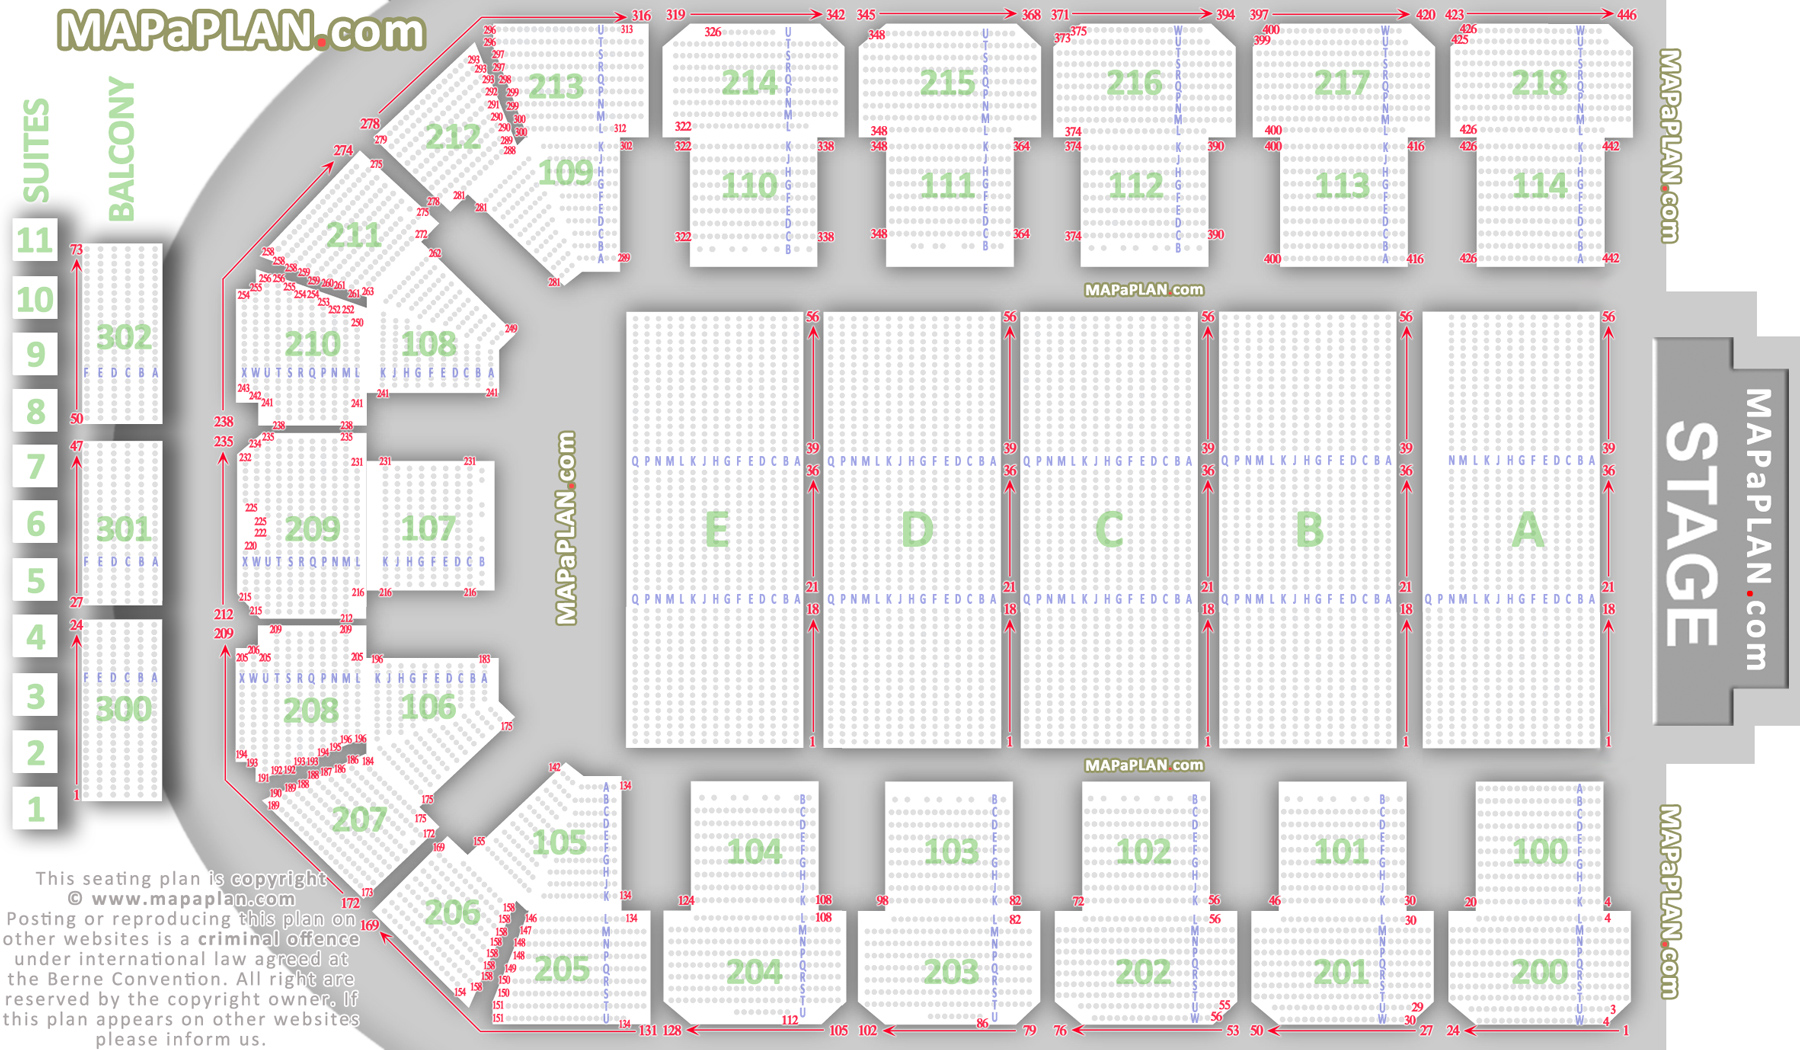 Newcastle Metro Radio Arena Detailed seat numbers & row